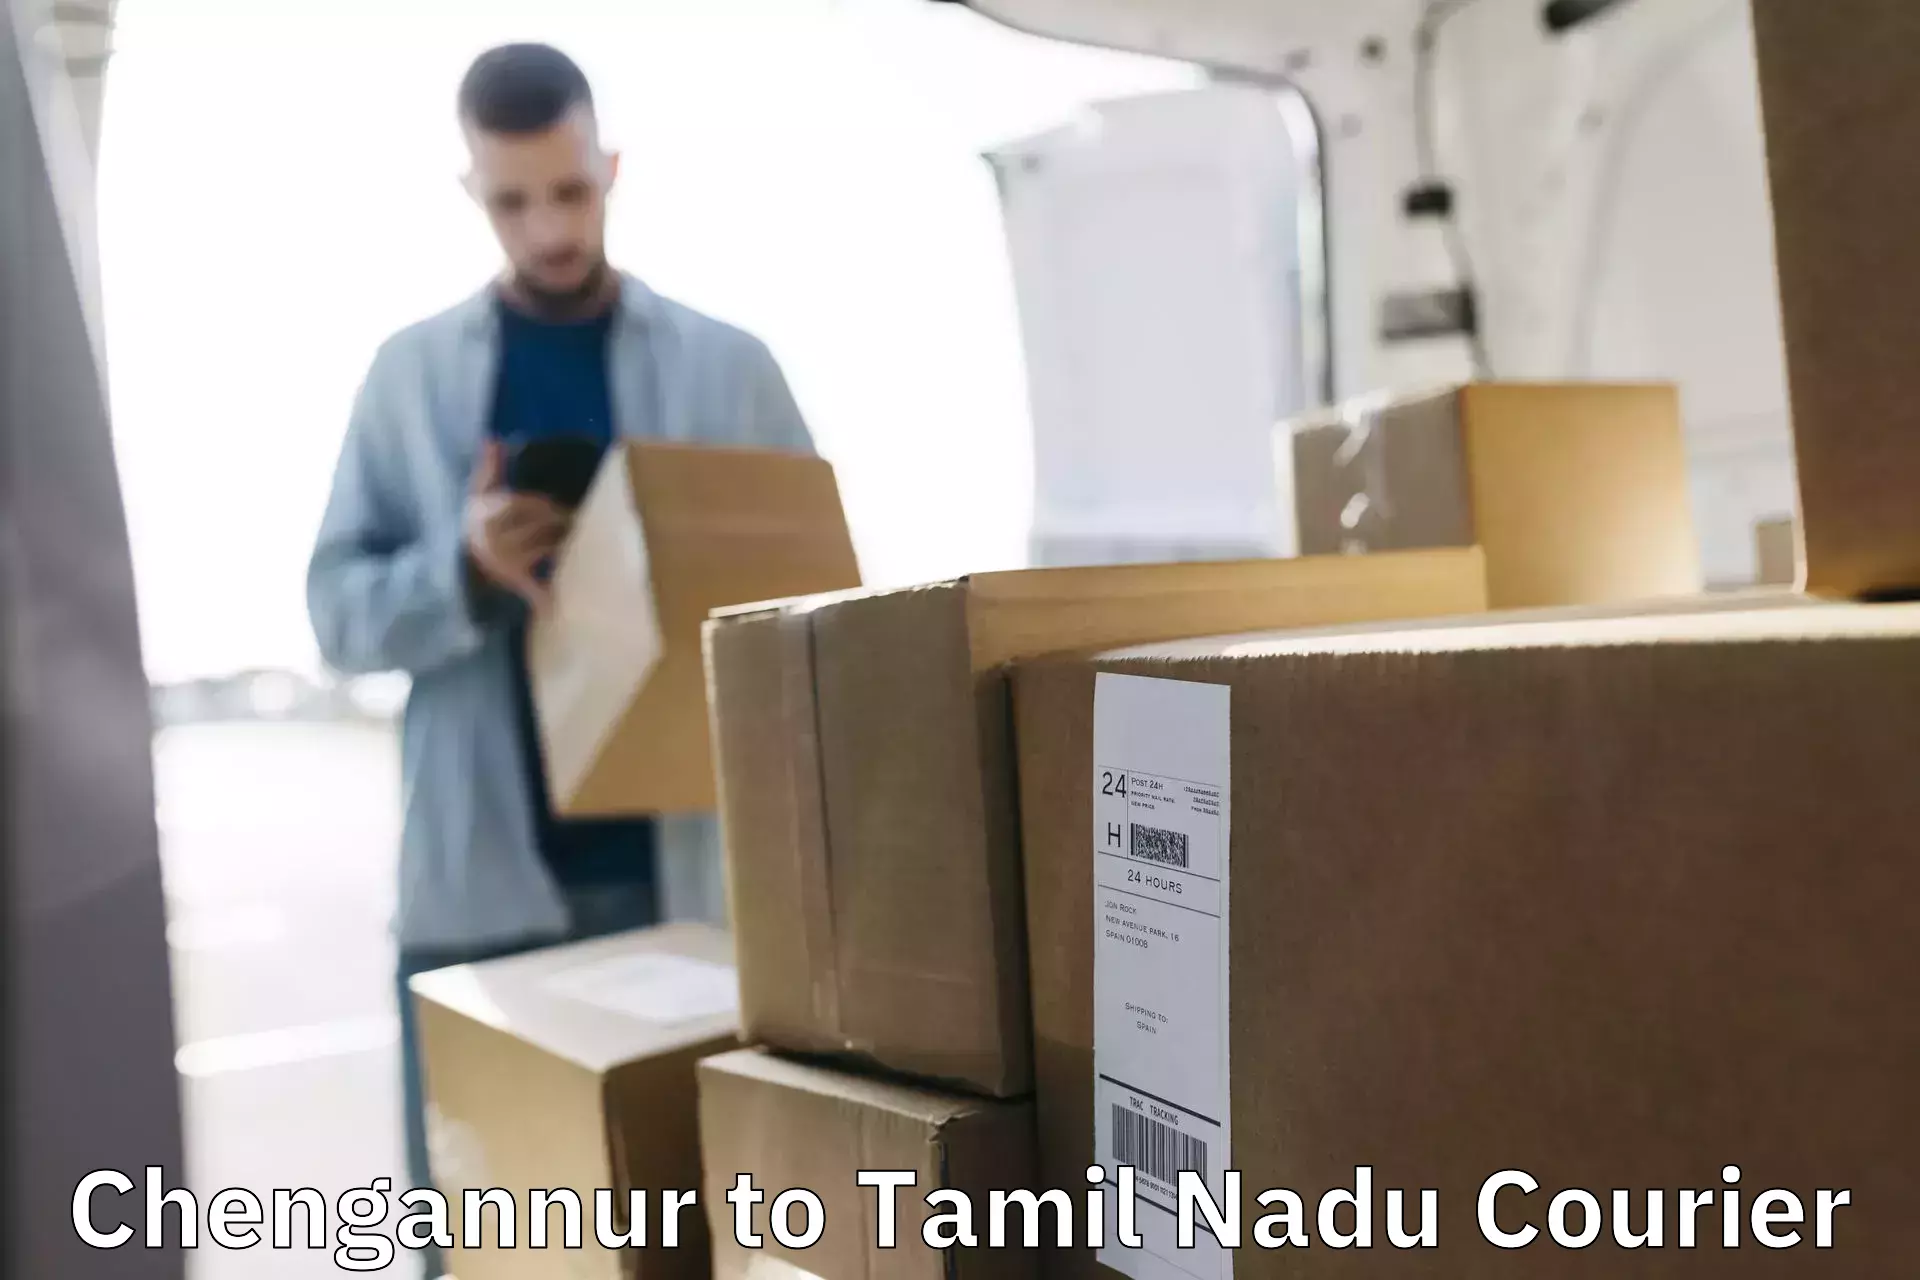 Flexible parcel services Chengannur to Chennai Port